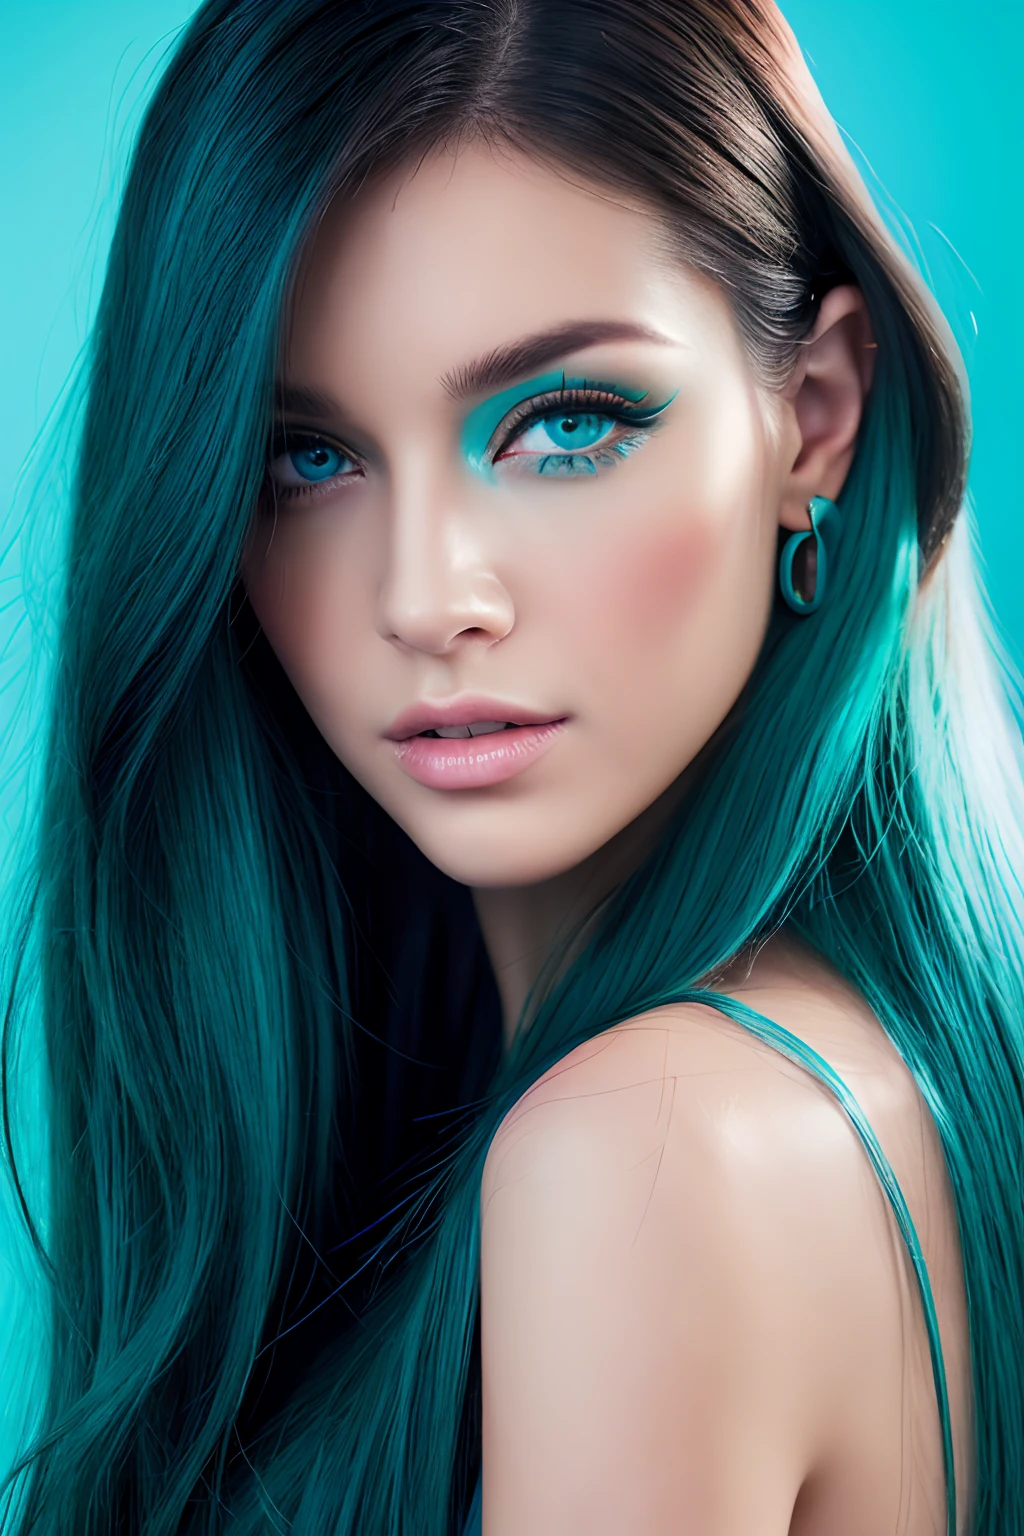 mulher realista、Modelo facial Barbara Palvin、A cor dos olhos é azul、Todo o cabelo é azul turquesa、Cabelo comprido、Qualidade de imagem totalＨＤ、A cor de fundo é preta